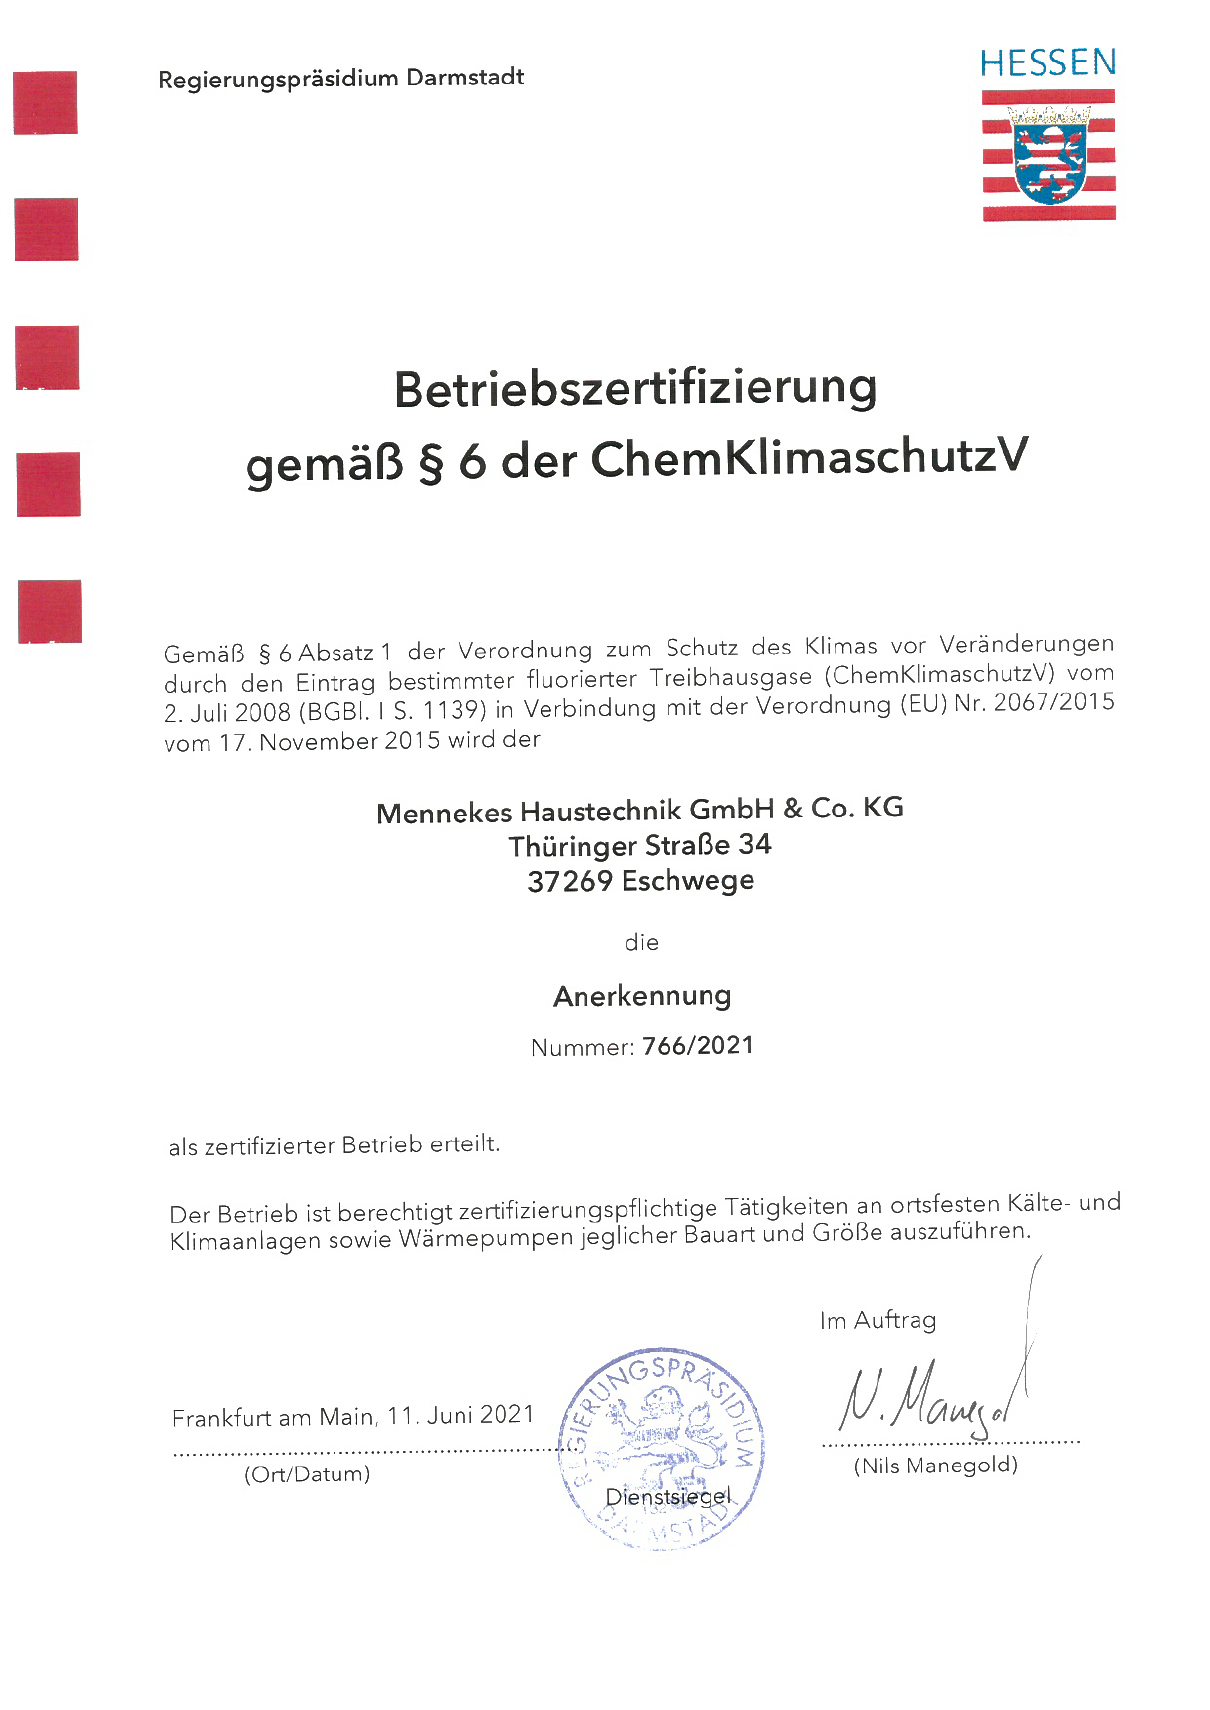 Mennekes Haustechnik GmbH & Co.KG - Zertifikate 8